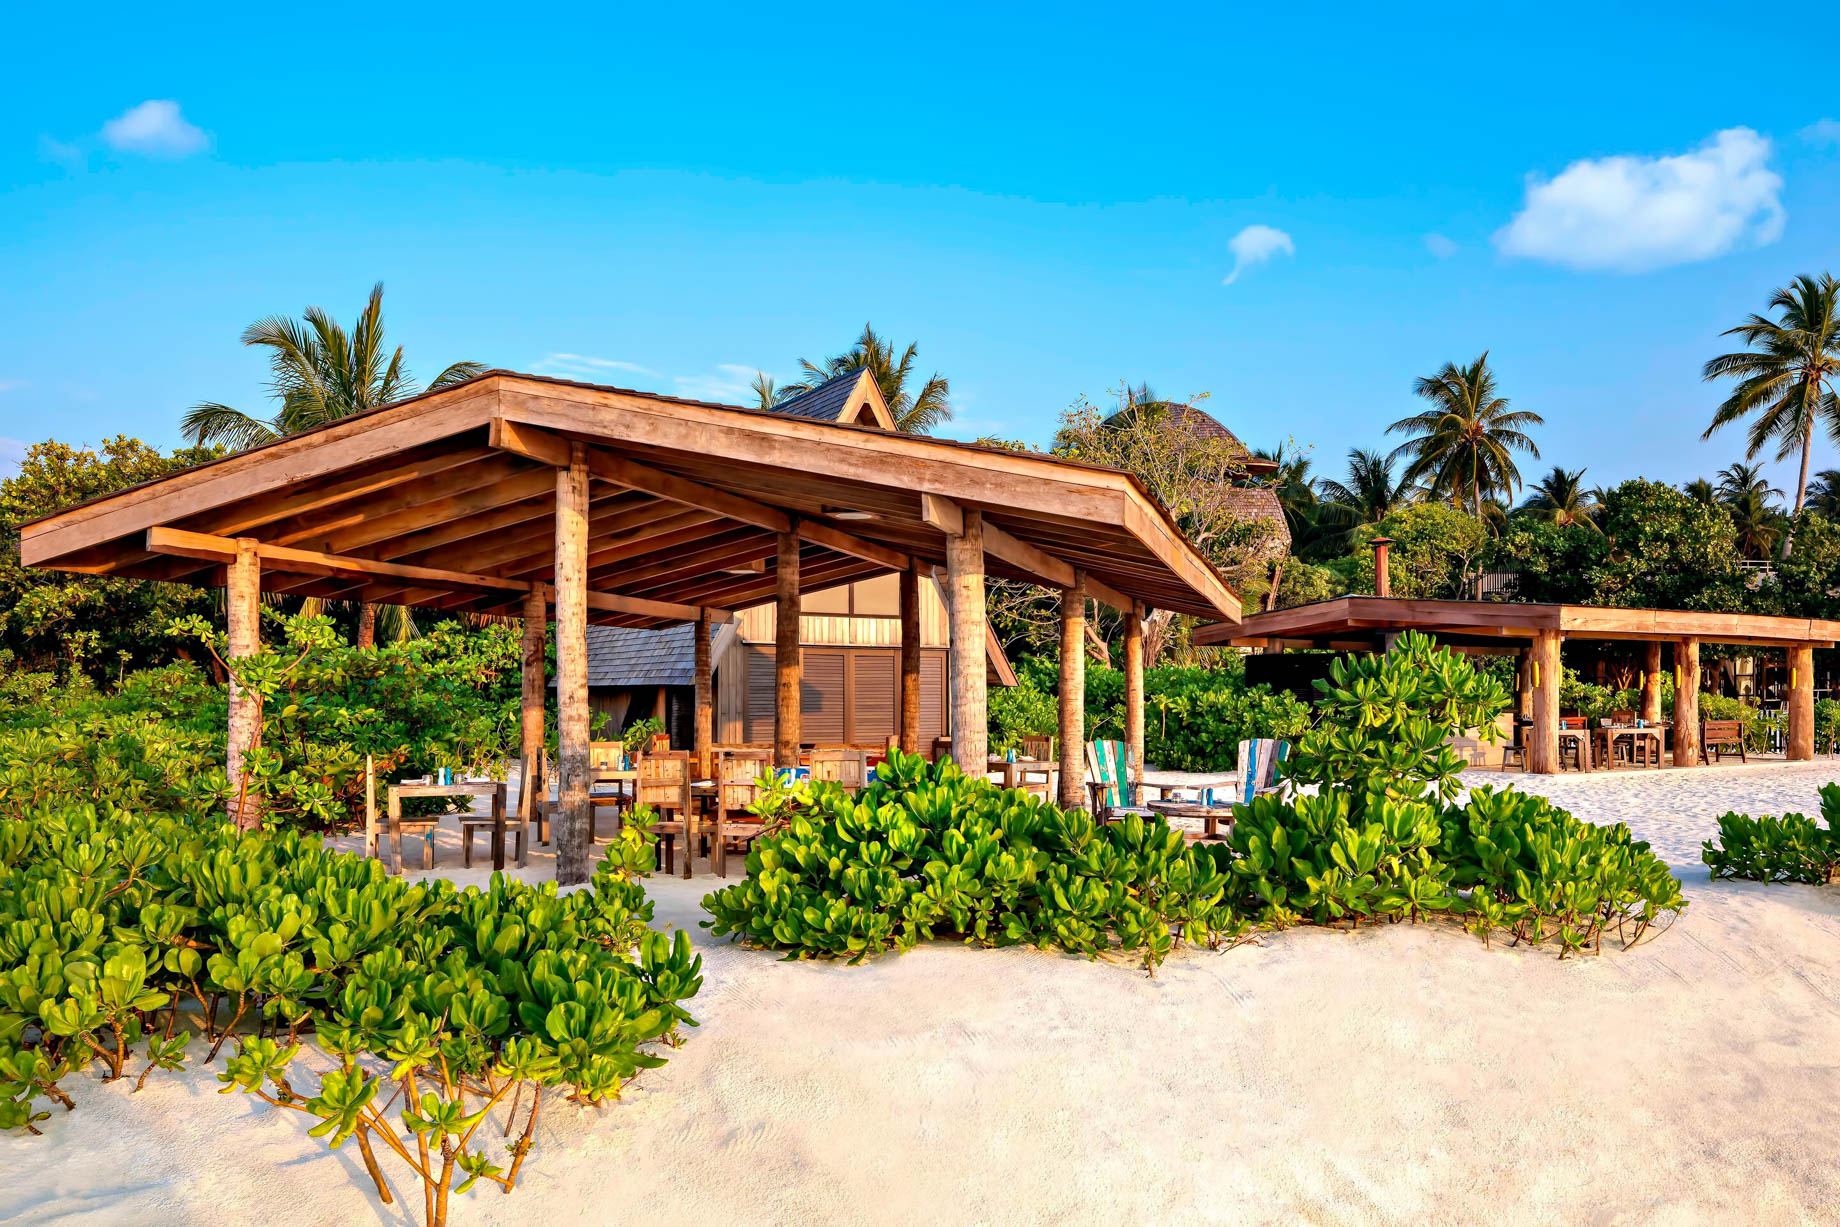 The St. Regis Maldives Vommuli Resort - Dhaalu Atoll, Maldives - Craft and Crust Restaurants